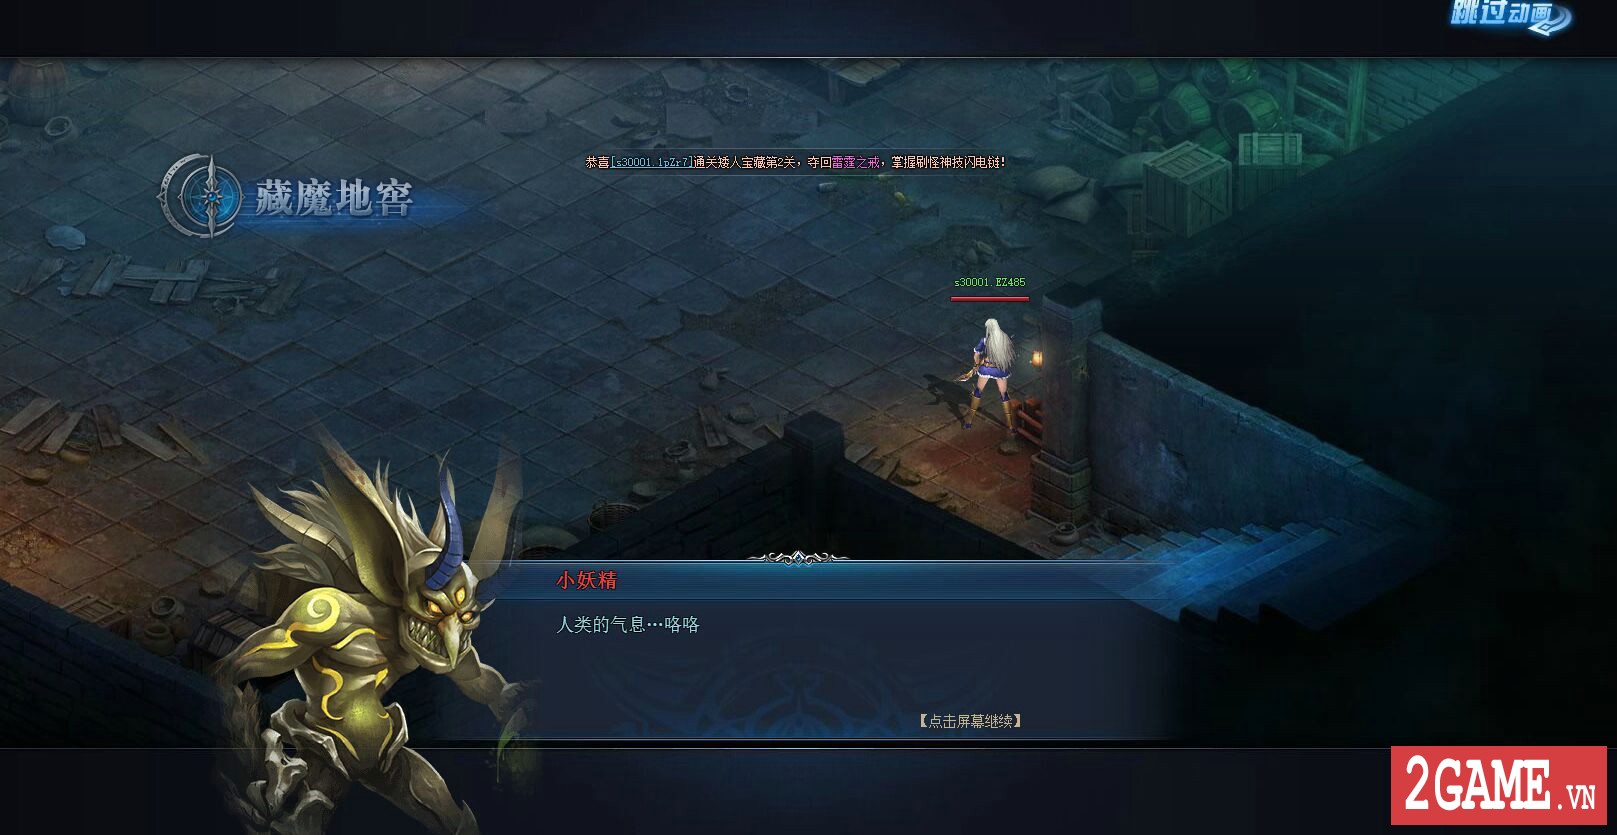 2game-webgame-ky-nguyen-vinh-hang-3.jpg (1617×835)